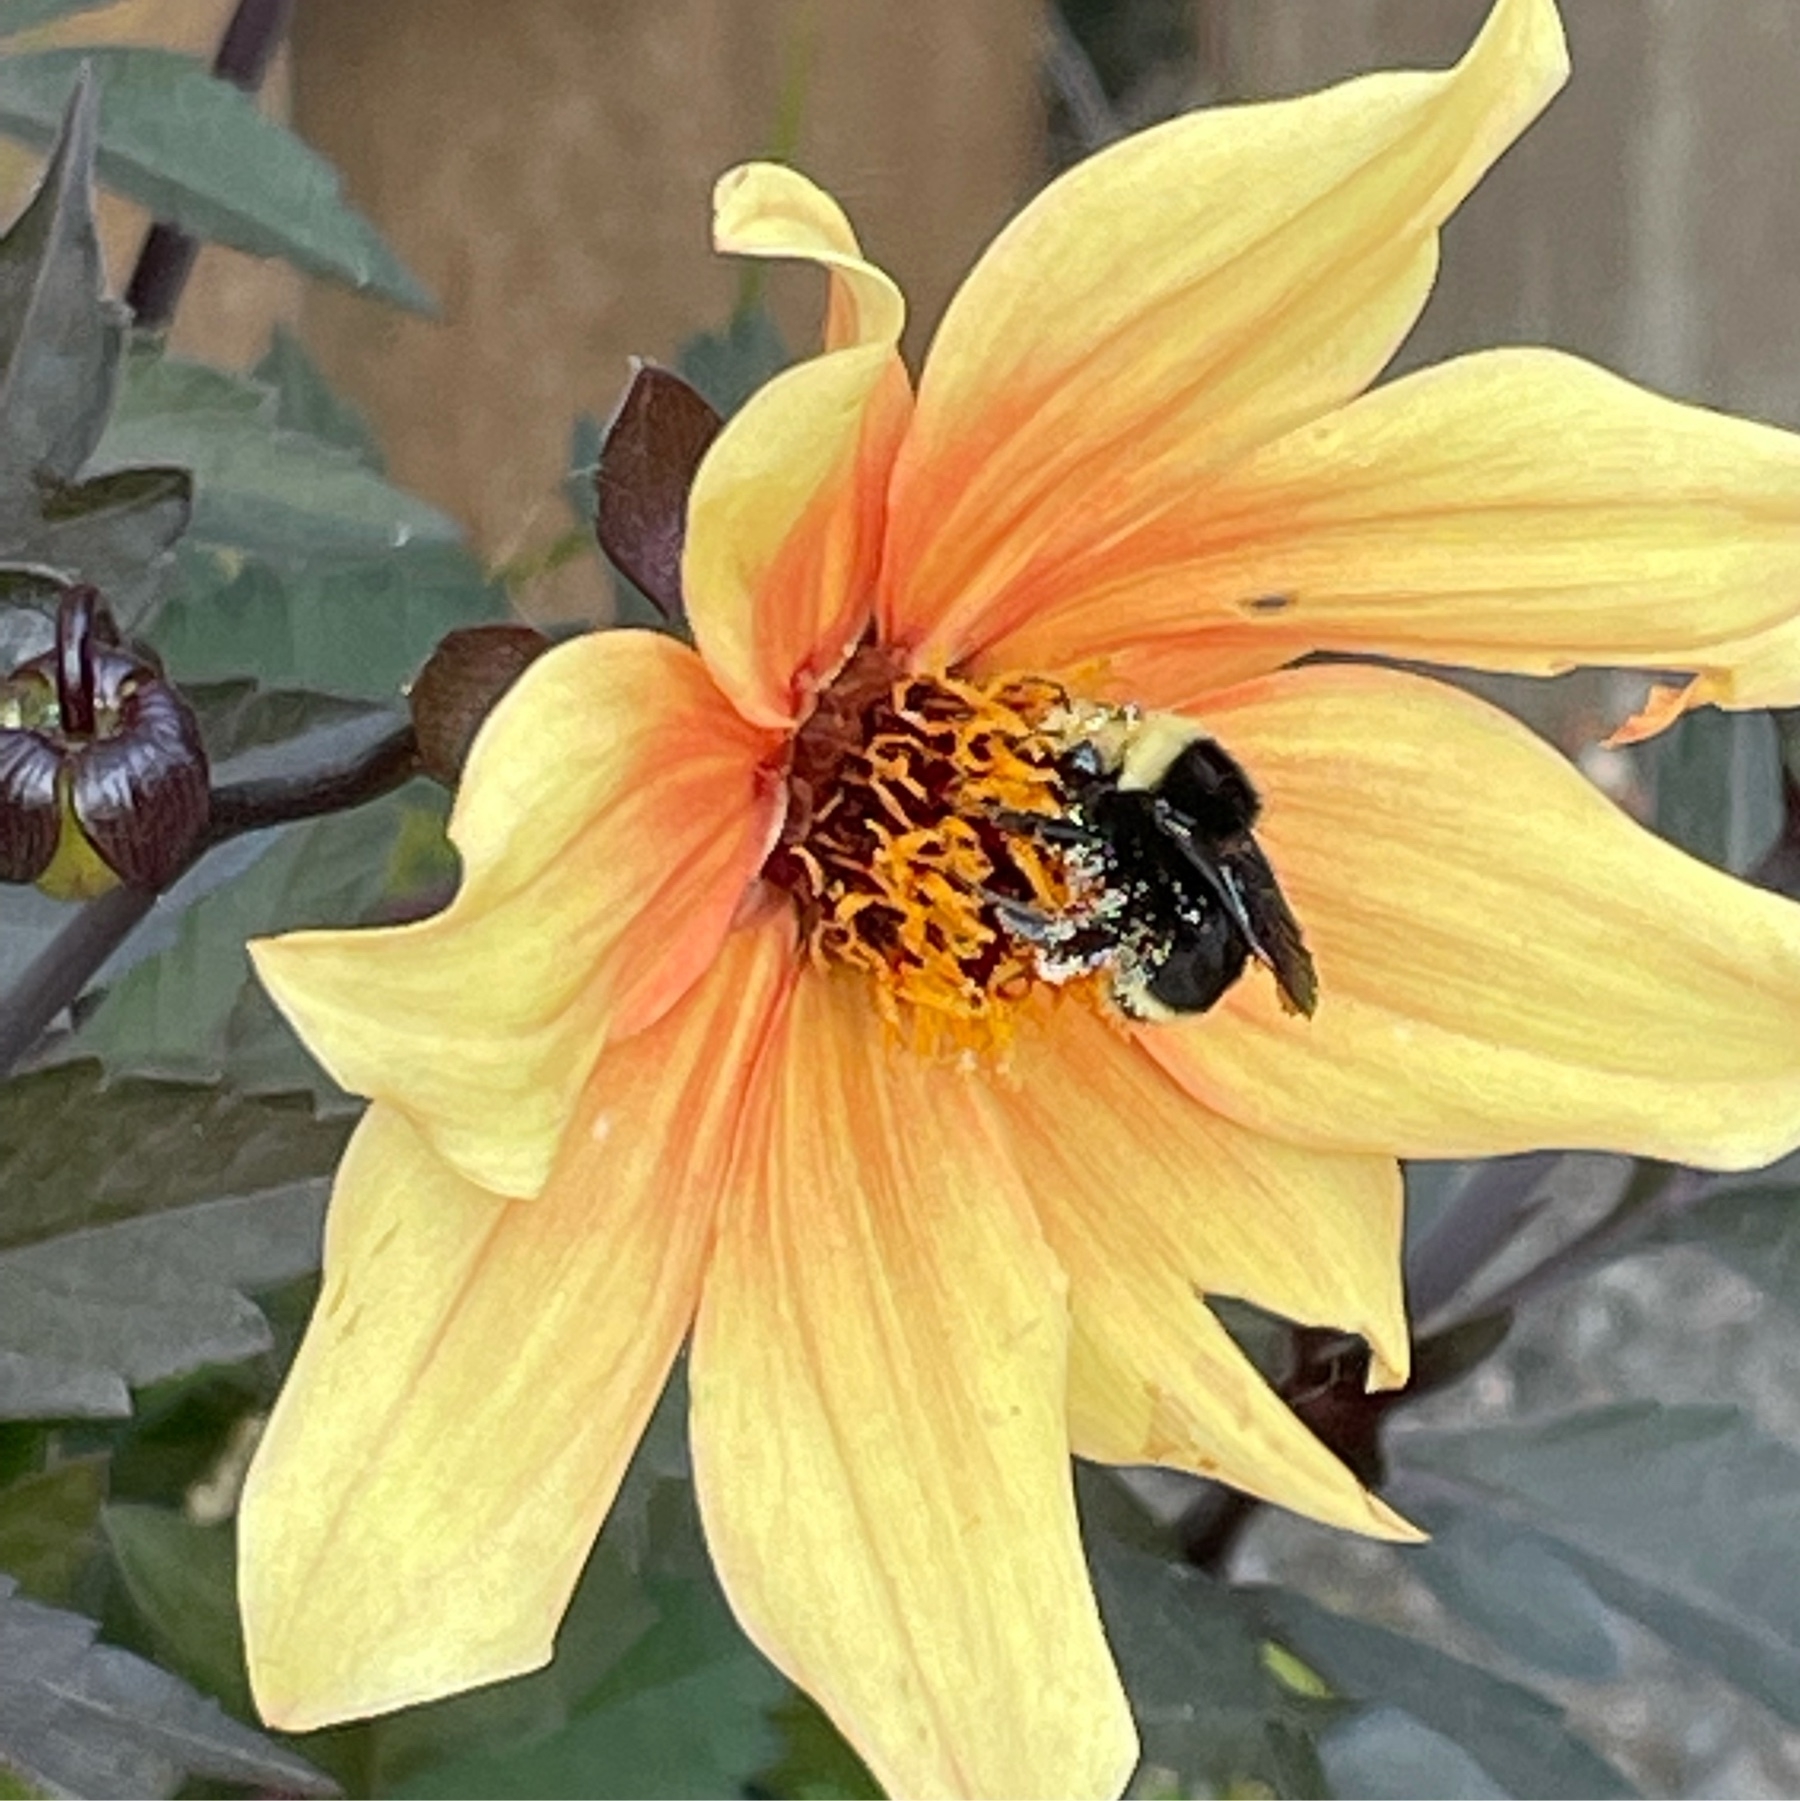 Bumblebee on dahlia flower